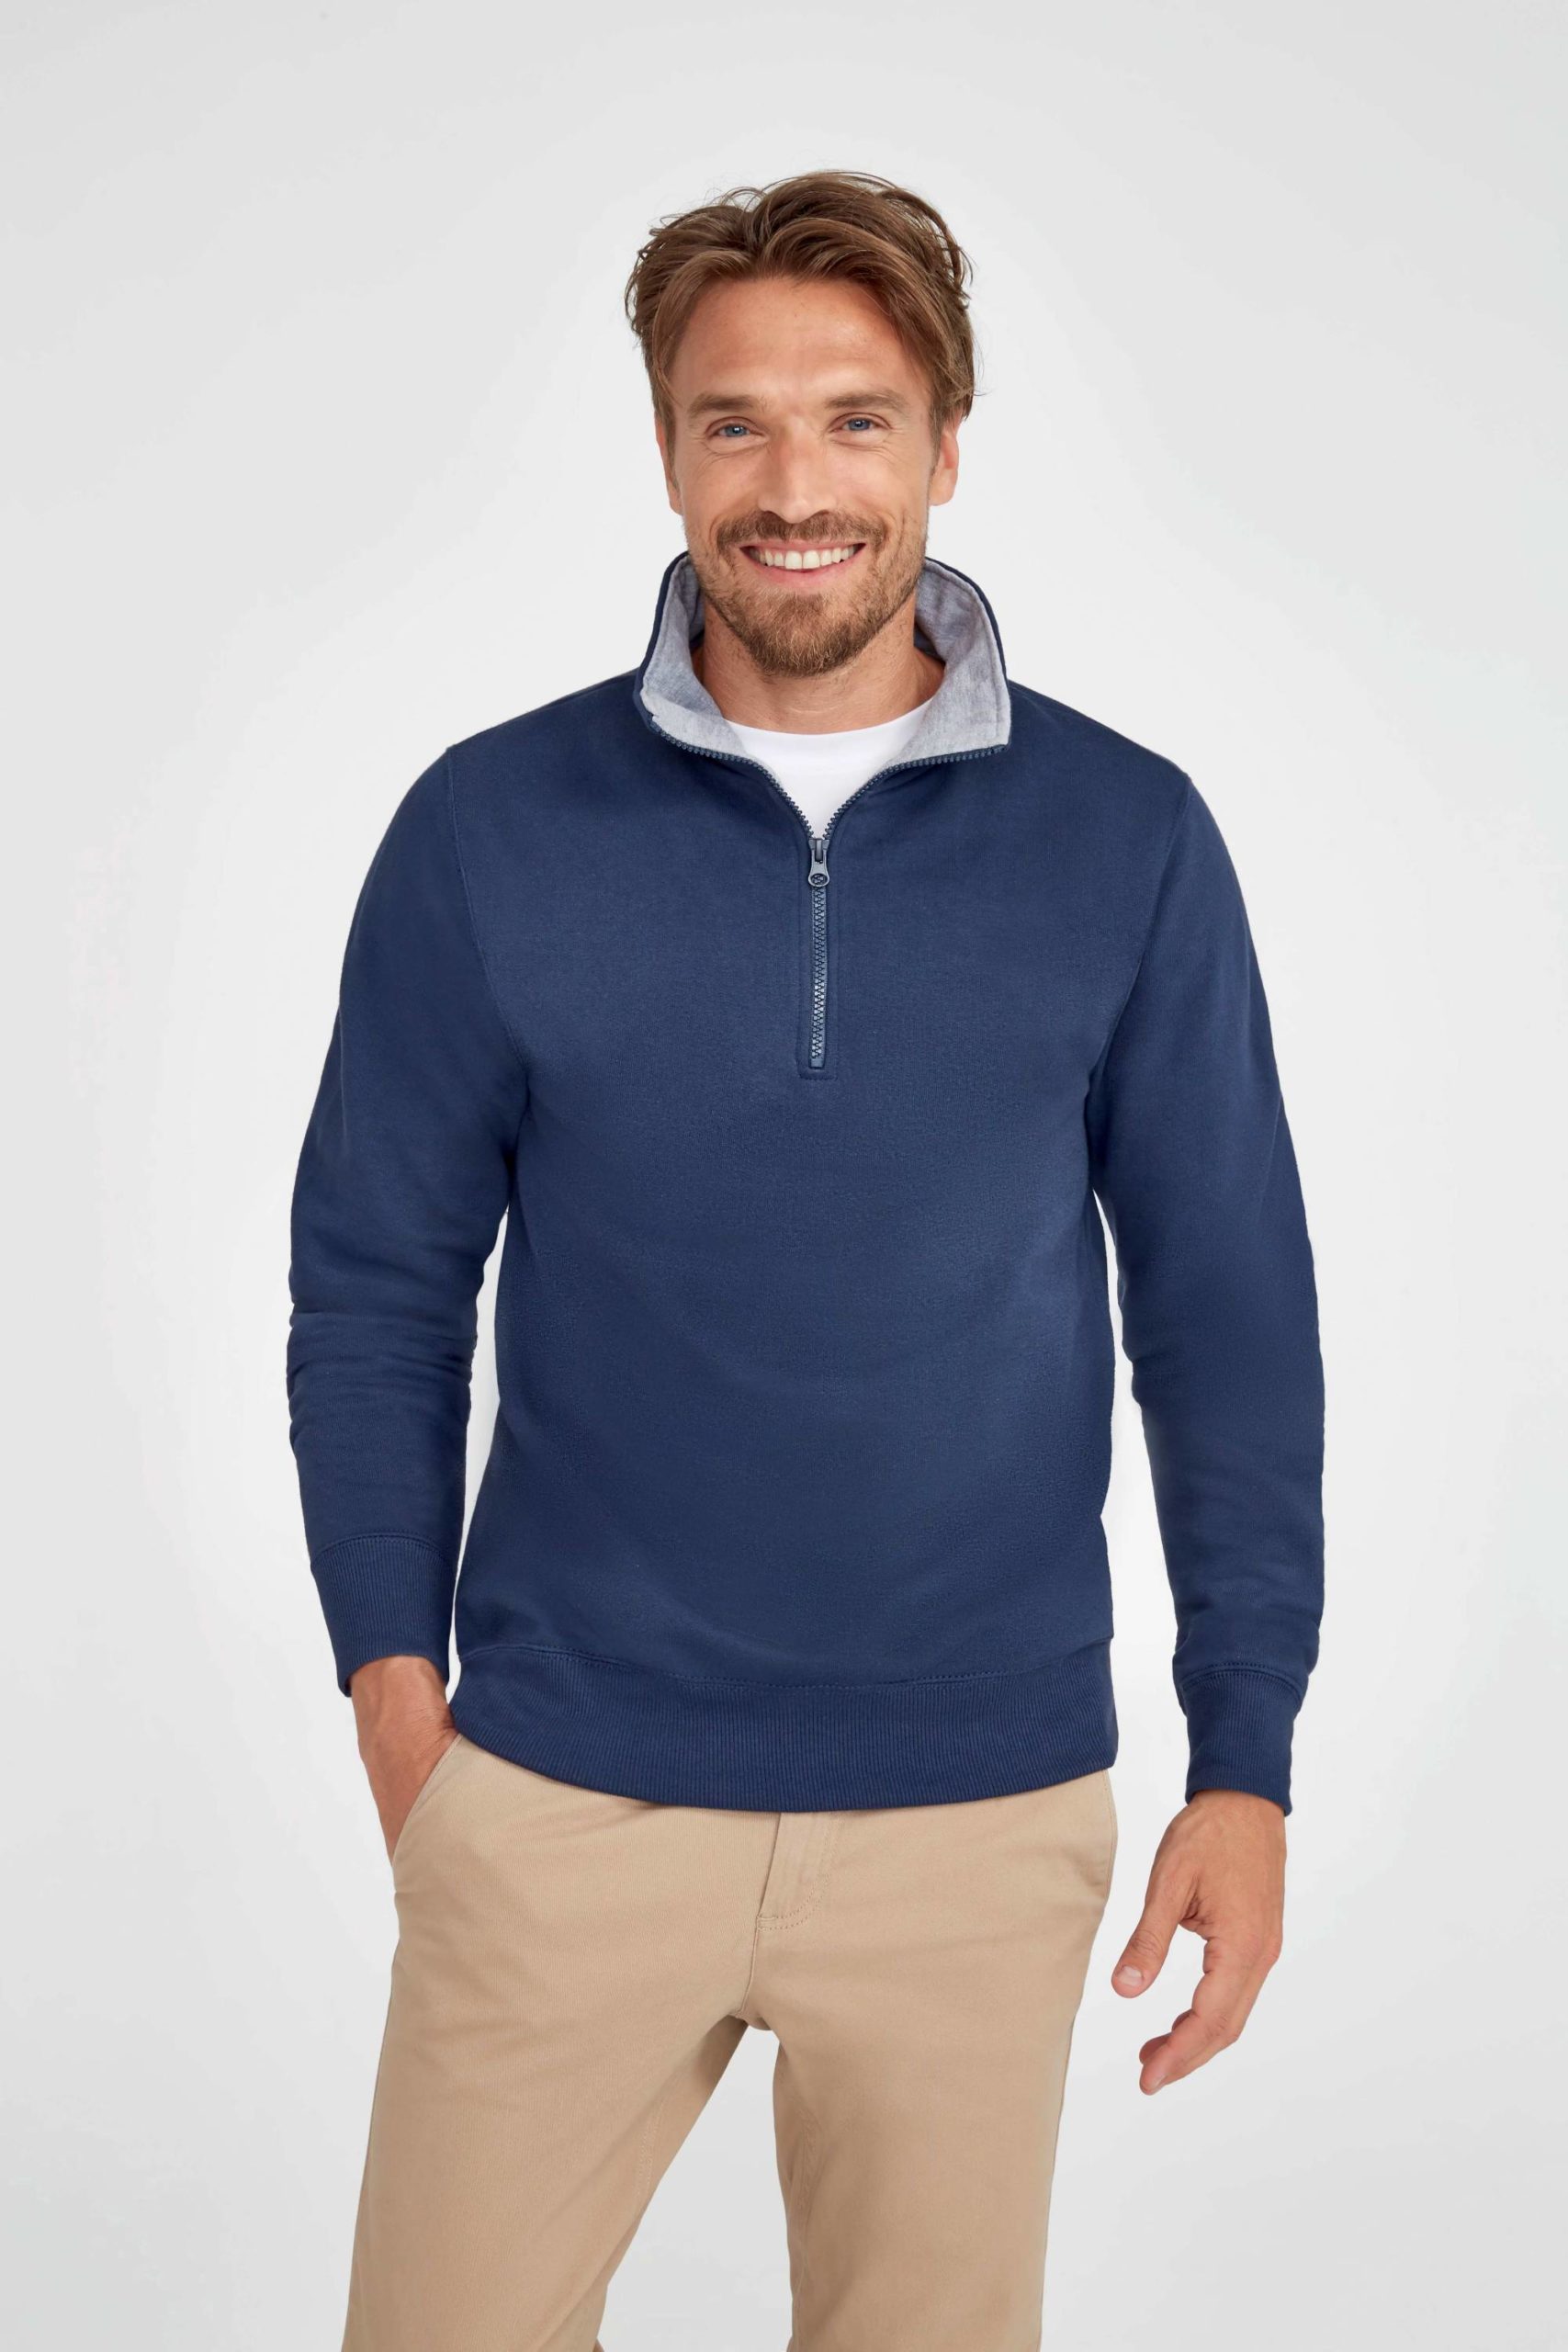 Herren Sweatshirt mit und Zipper – Bever-Store